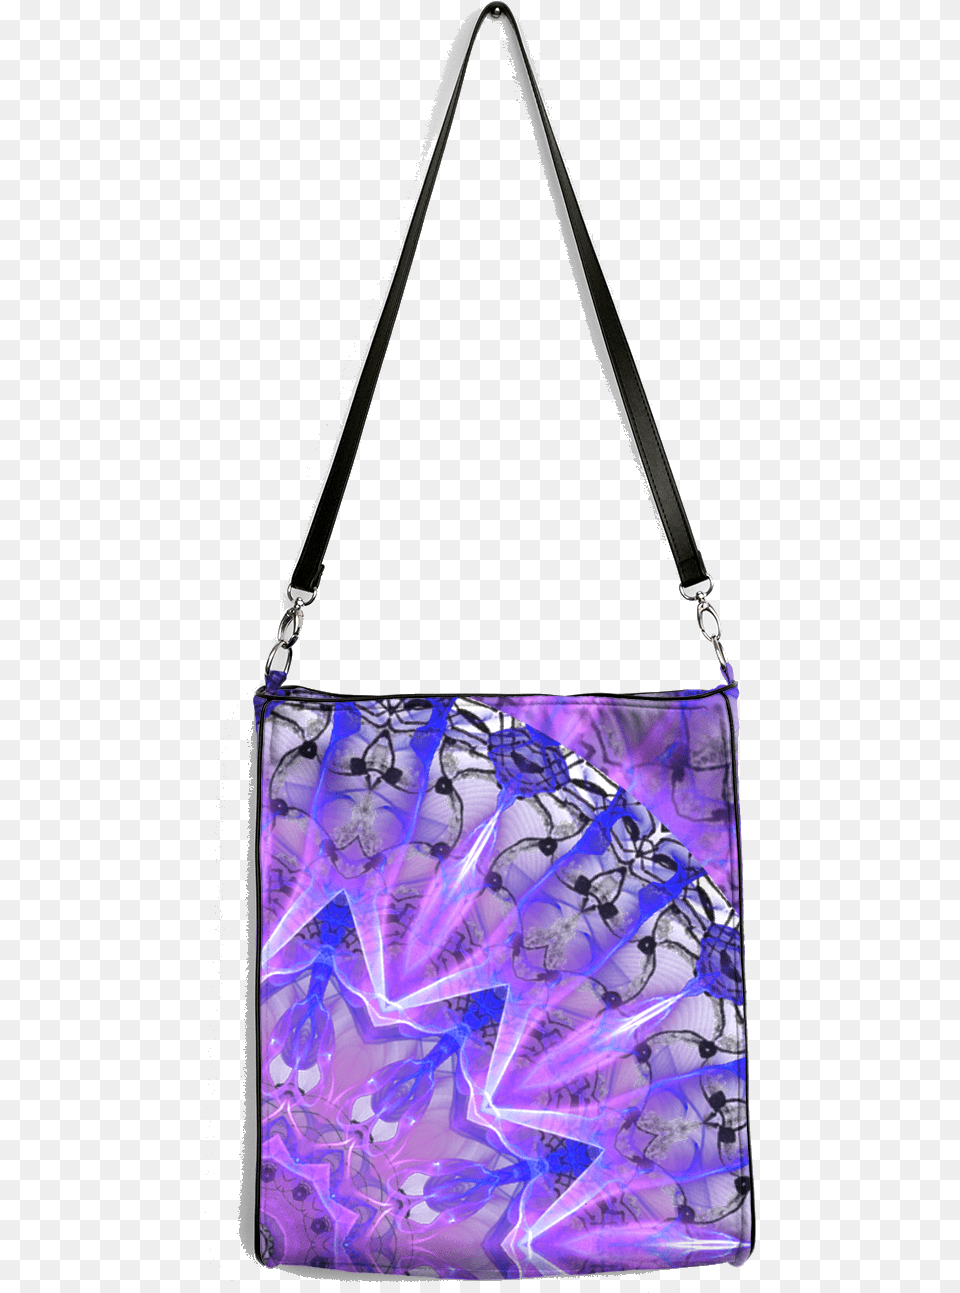 Abstract Plum Ice Crystal Palace Lattice Lace Mandala Shoulder Bag, Accessories, Handbag, Purse Free Png Download